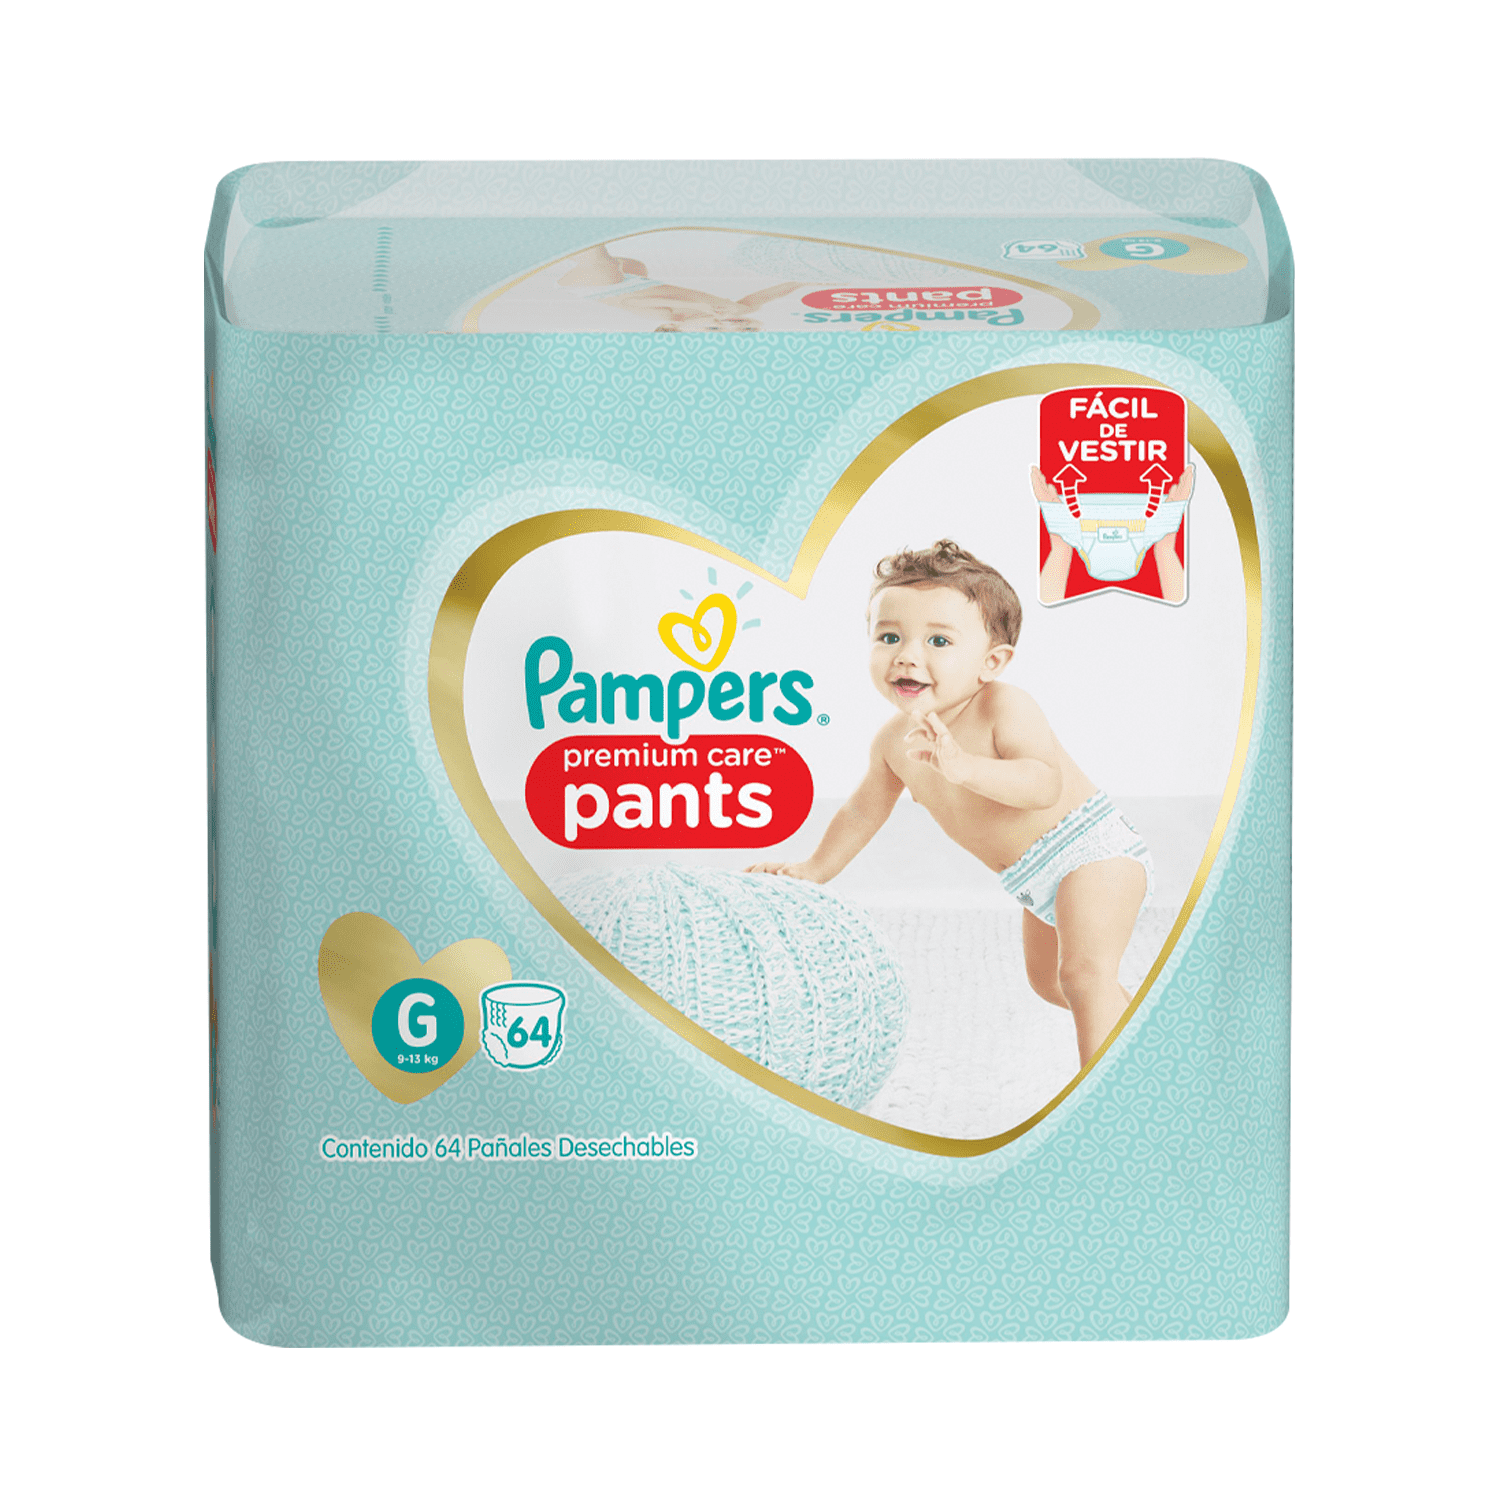 Pack Toallitas Húmedas Premium Babysec 3 X 45 Und - Supermercado Cugat